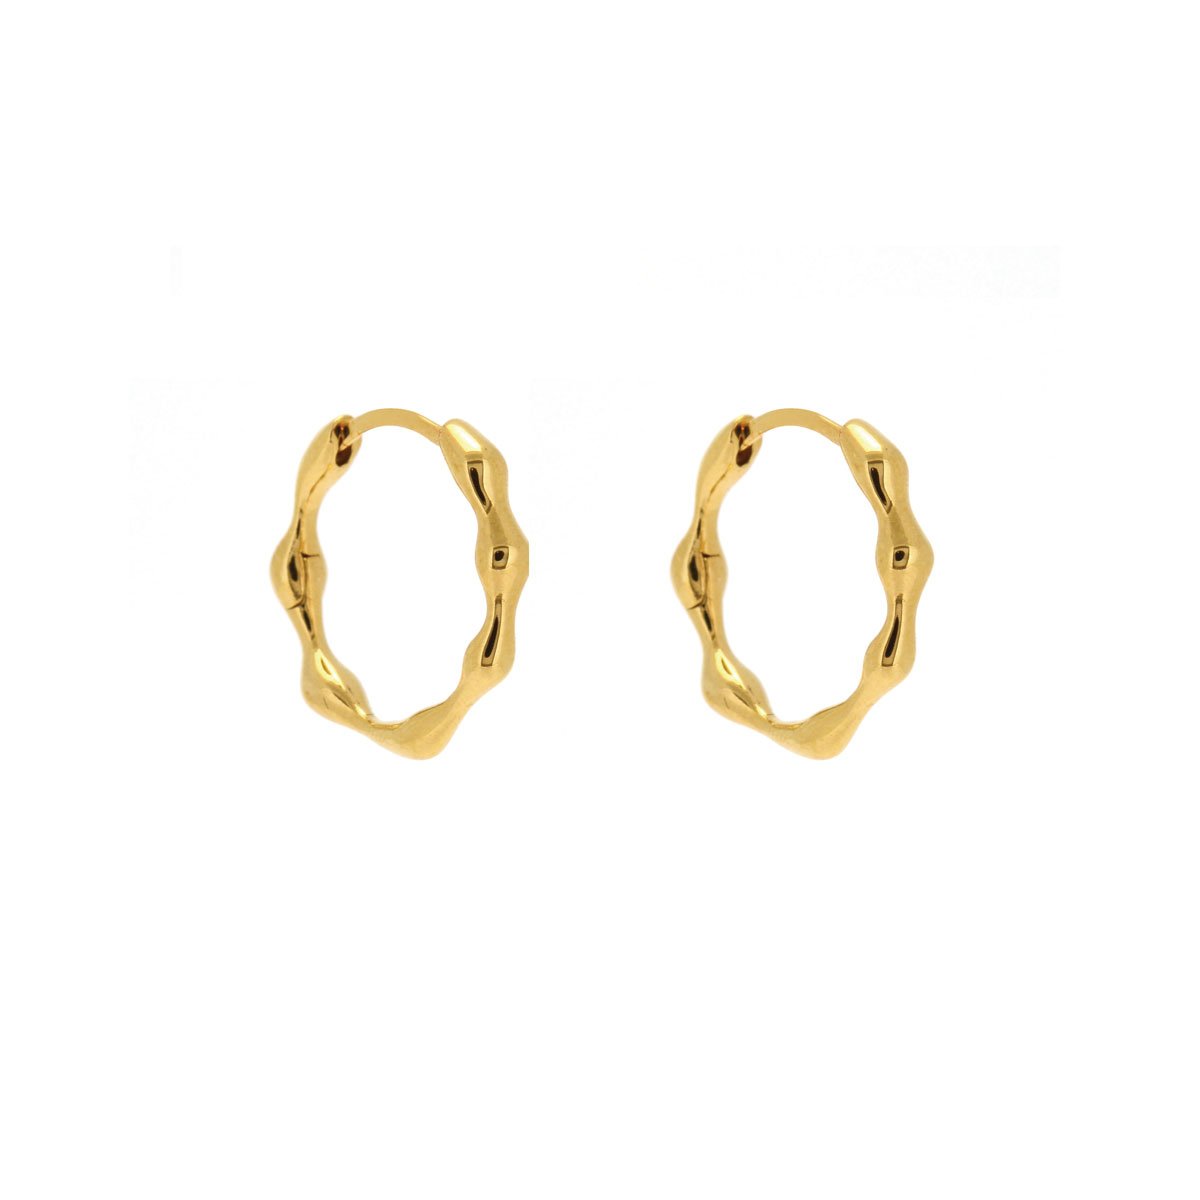 Linda Tahija Organica Huggie Earrings, Gold